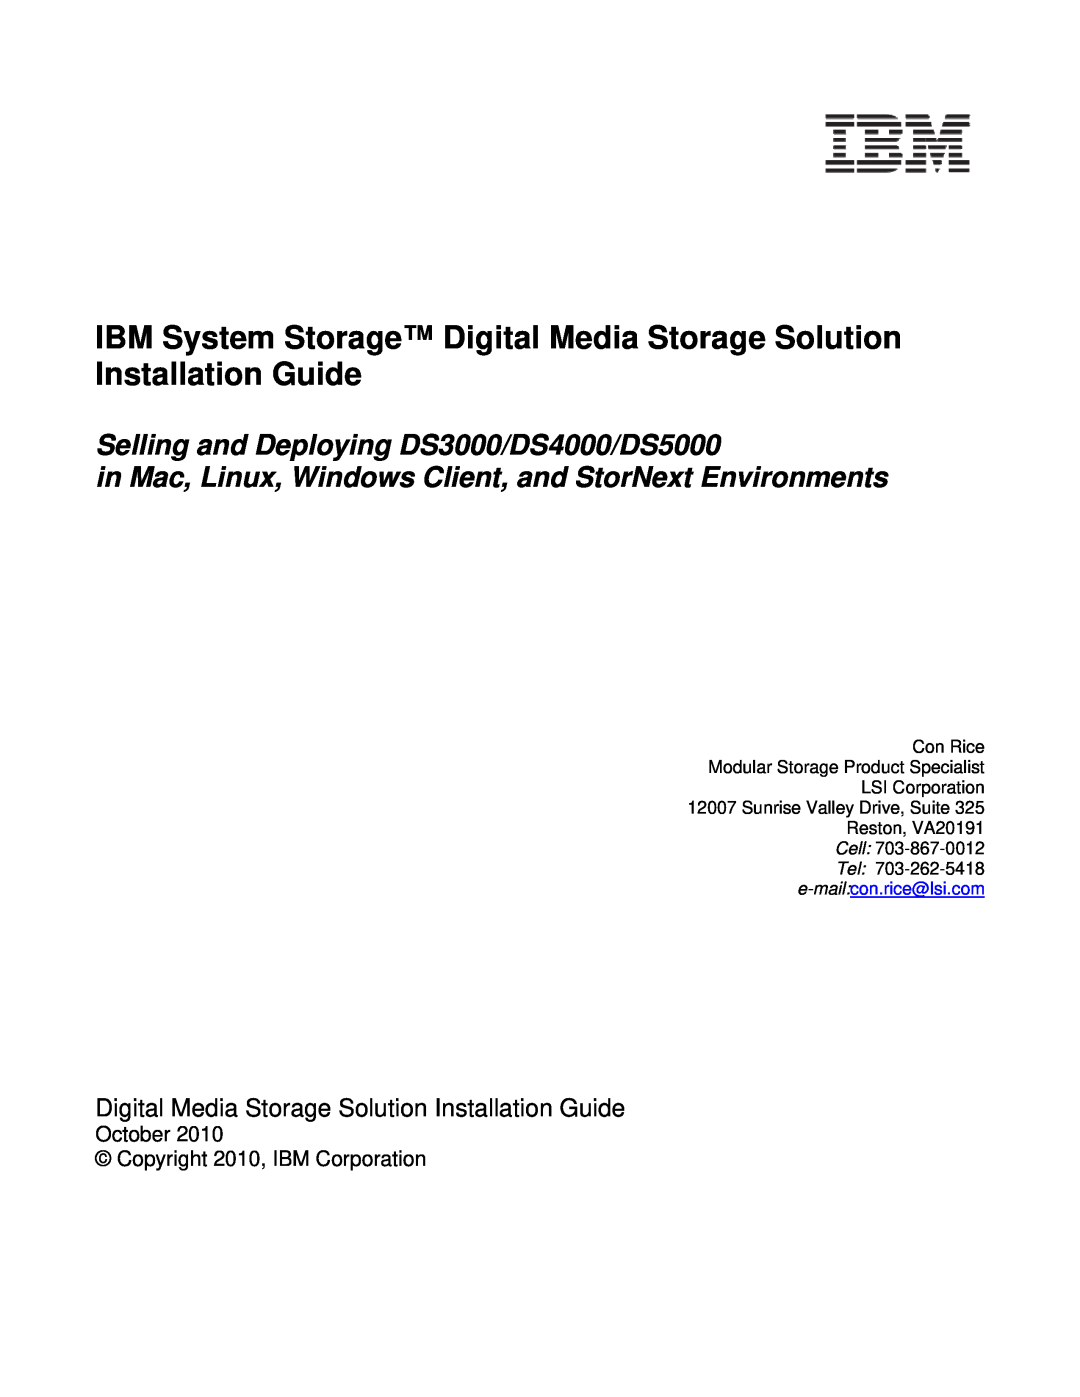 IBM DS3000 manual IBM System Storage Digital Media Storage Solution Installation Guide, e-mailcon.rice@lsi.com 